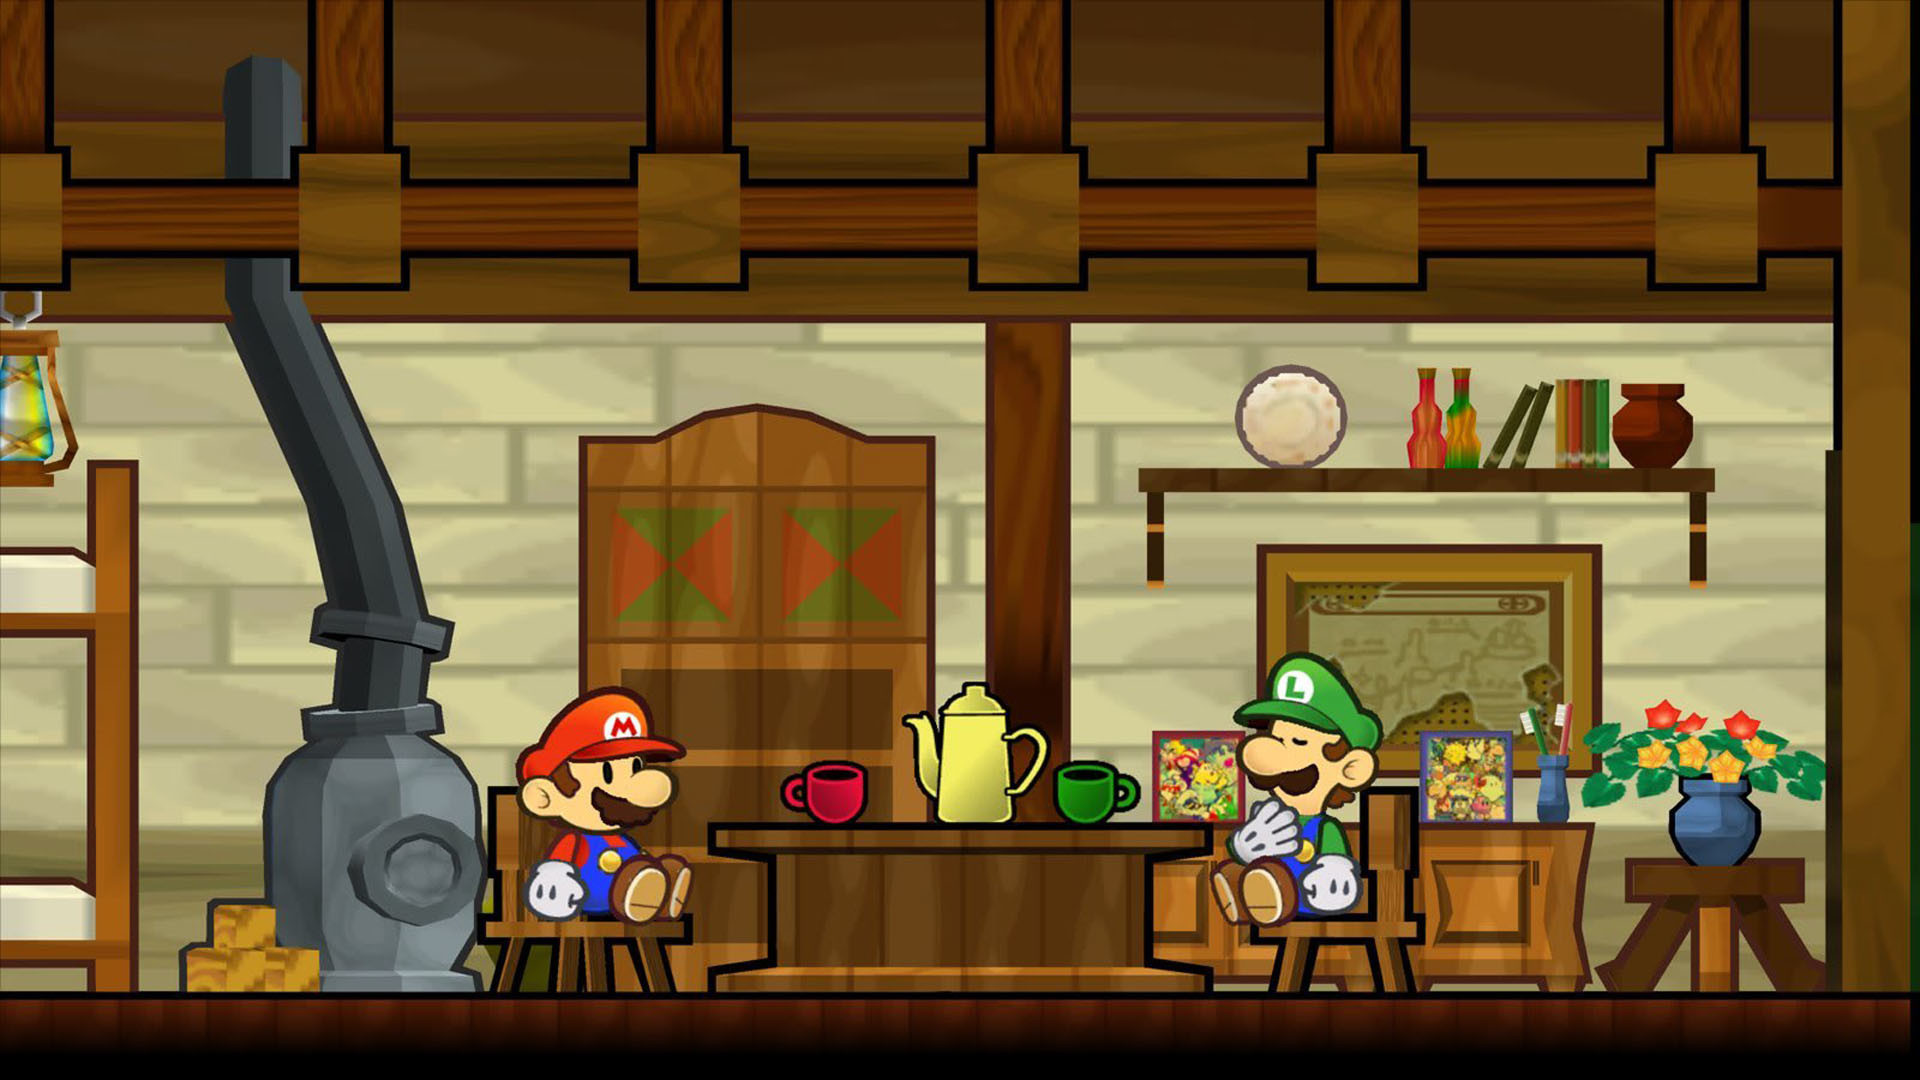 1920x1080 Super Paper Mario Having A Cup Of Tea With Luigi. next mario wallpaper